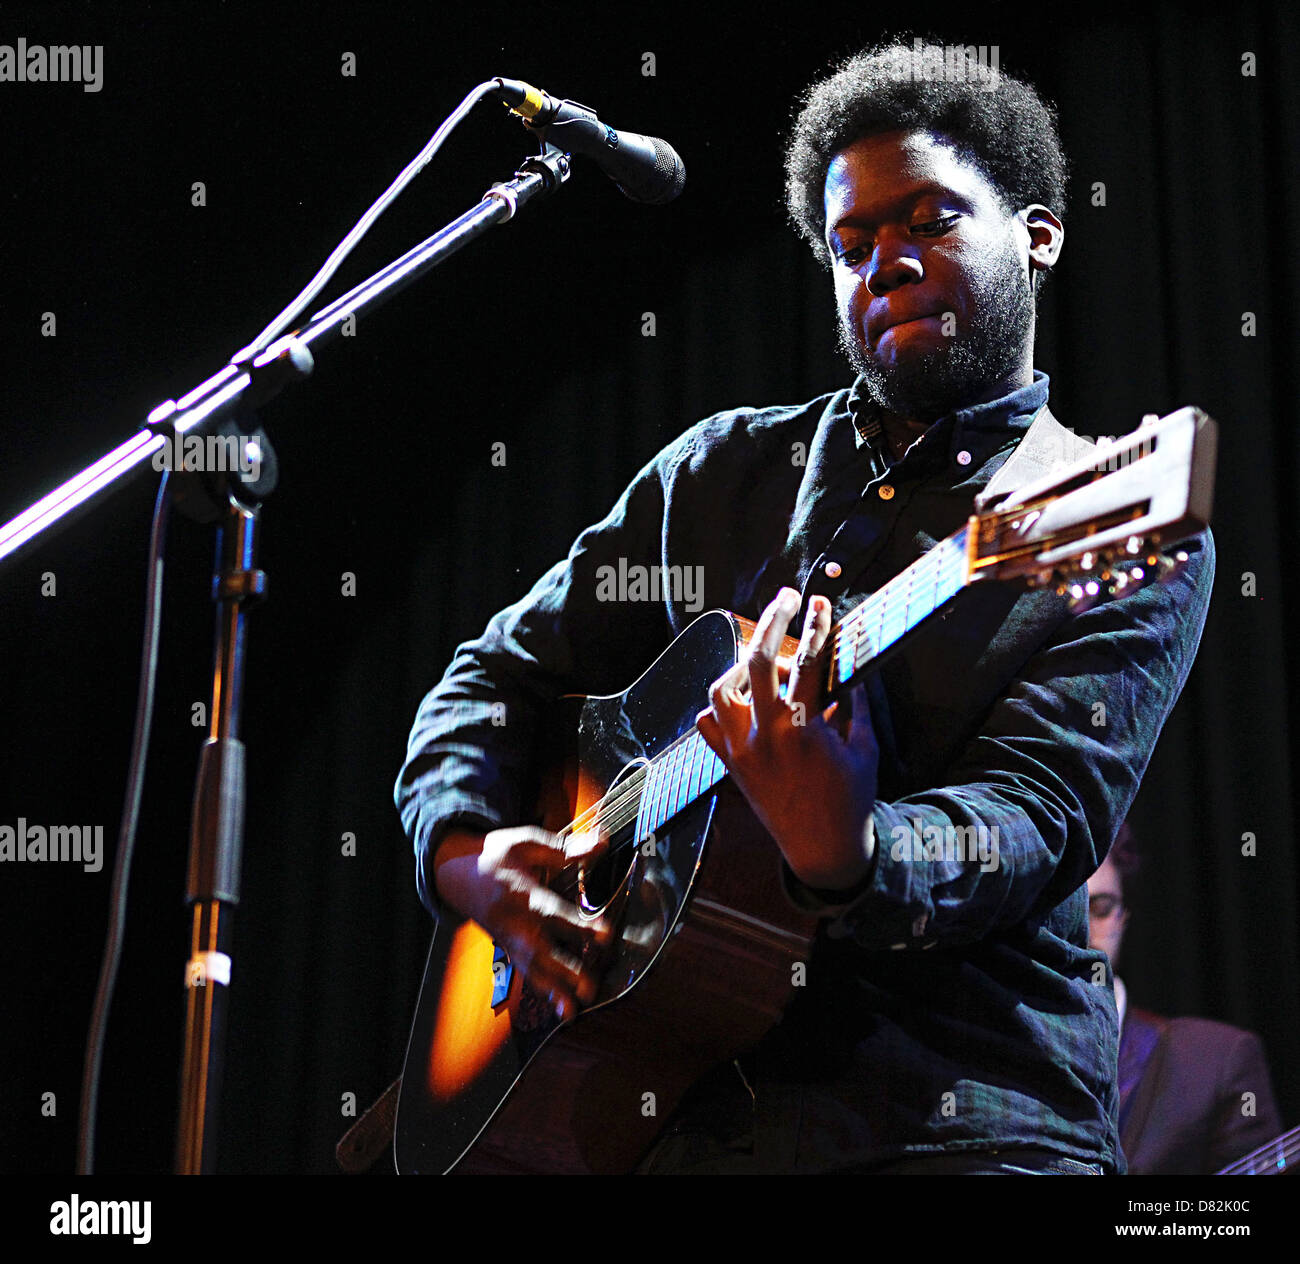 BBC's Sound of 2012 winner Michael Kiwanuka performing on stage at the Islington Assembley Hall. London, England - 16.02.12 Stock Photo